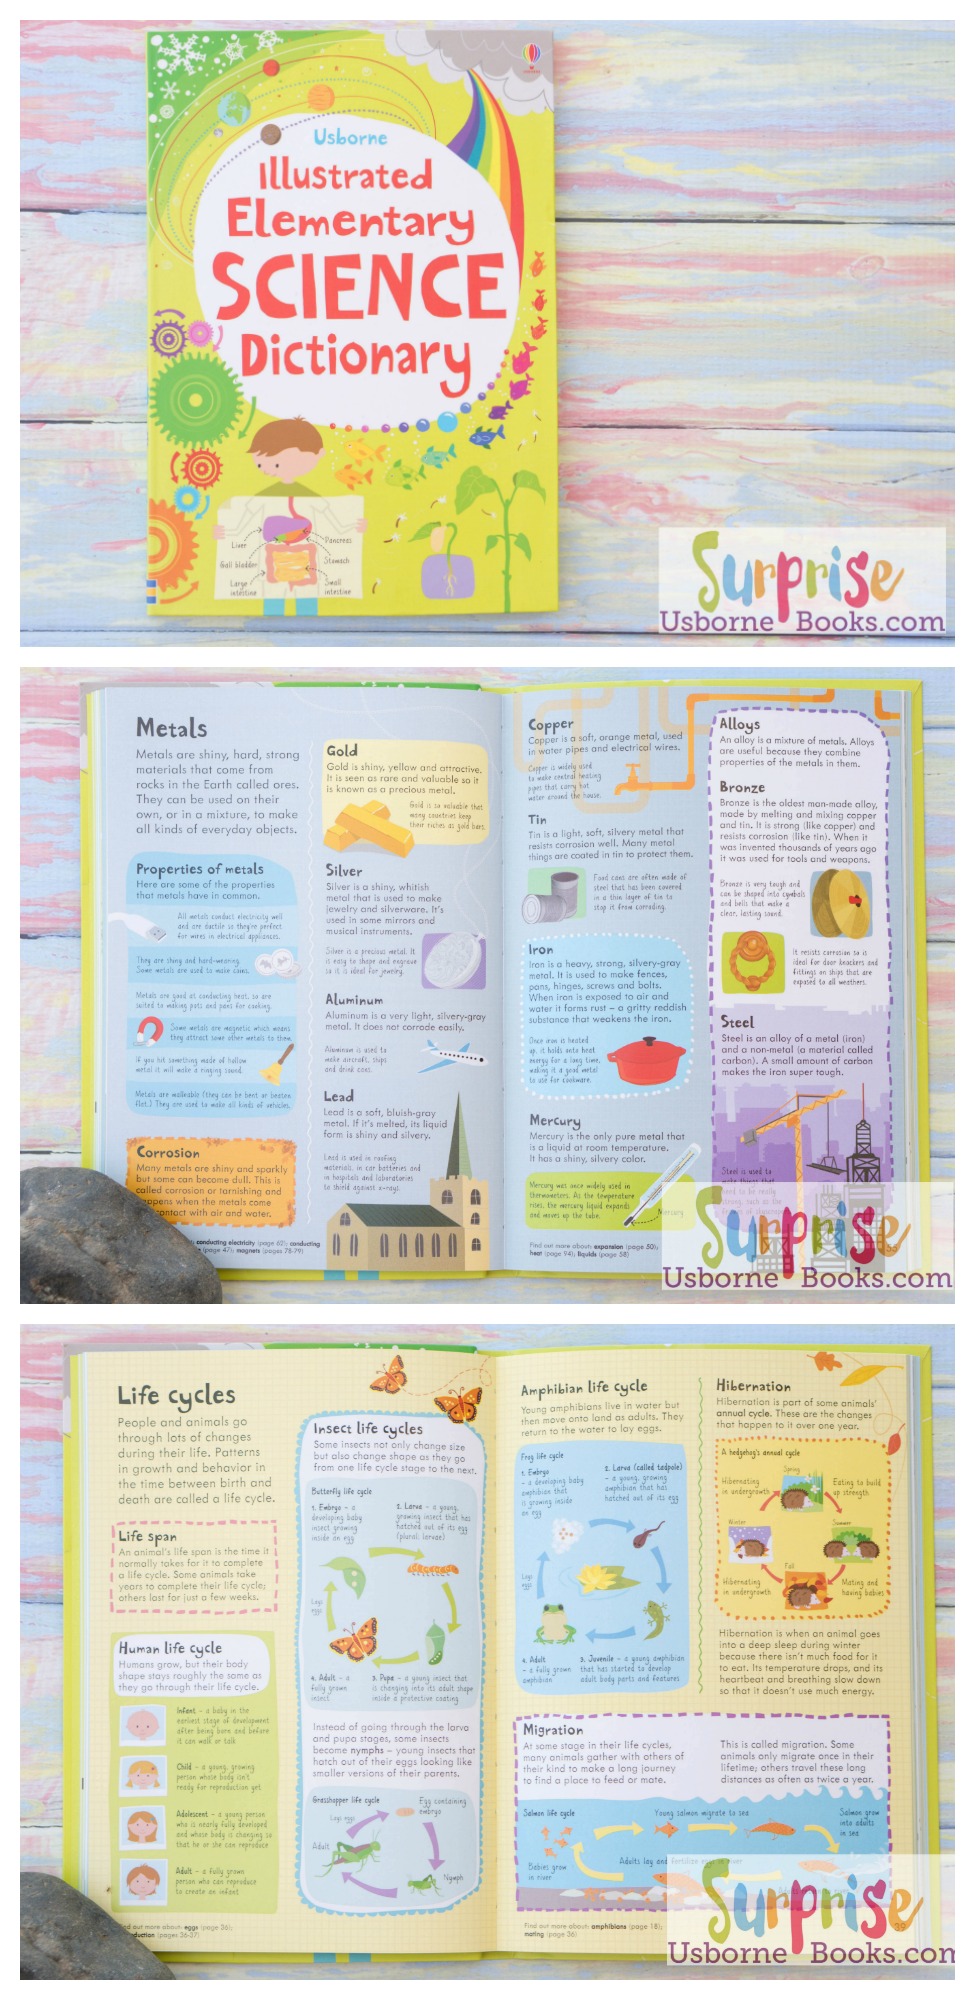 Illustrated Elementary Science Dictionary - Surprise Usborne Books